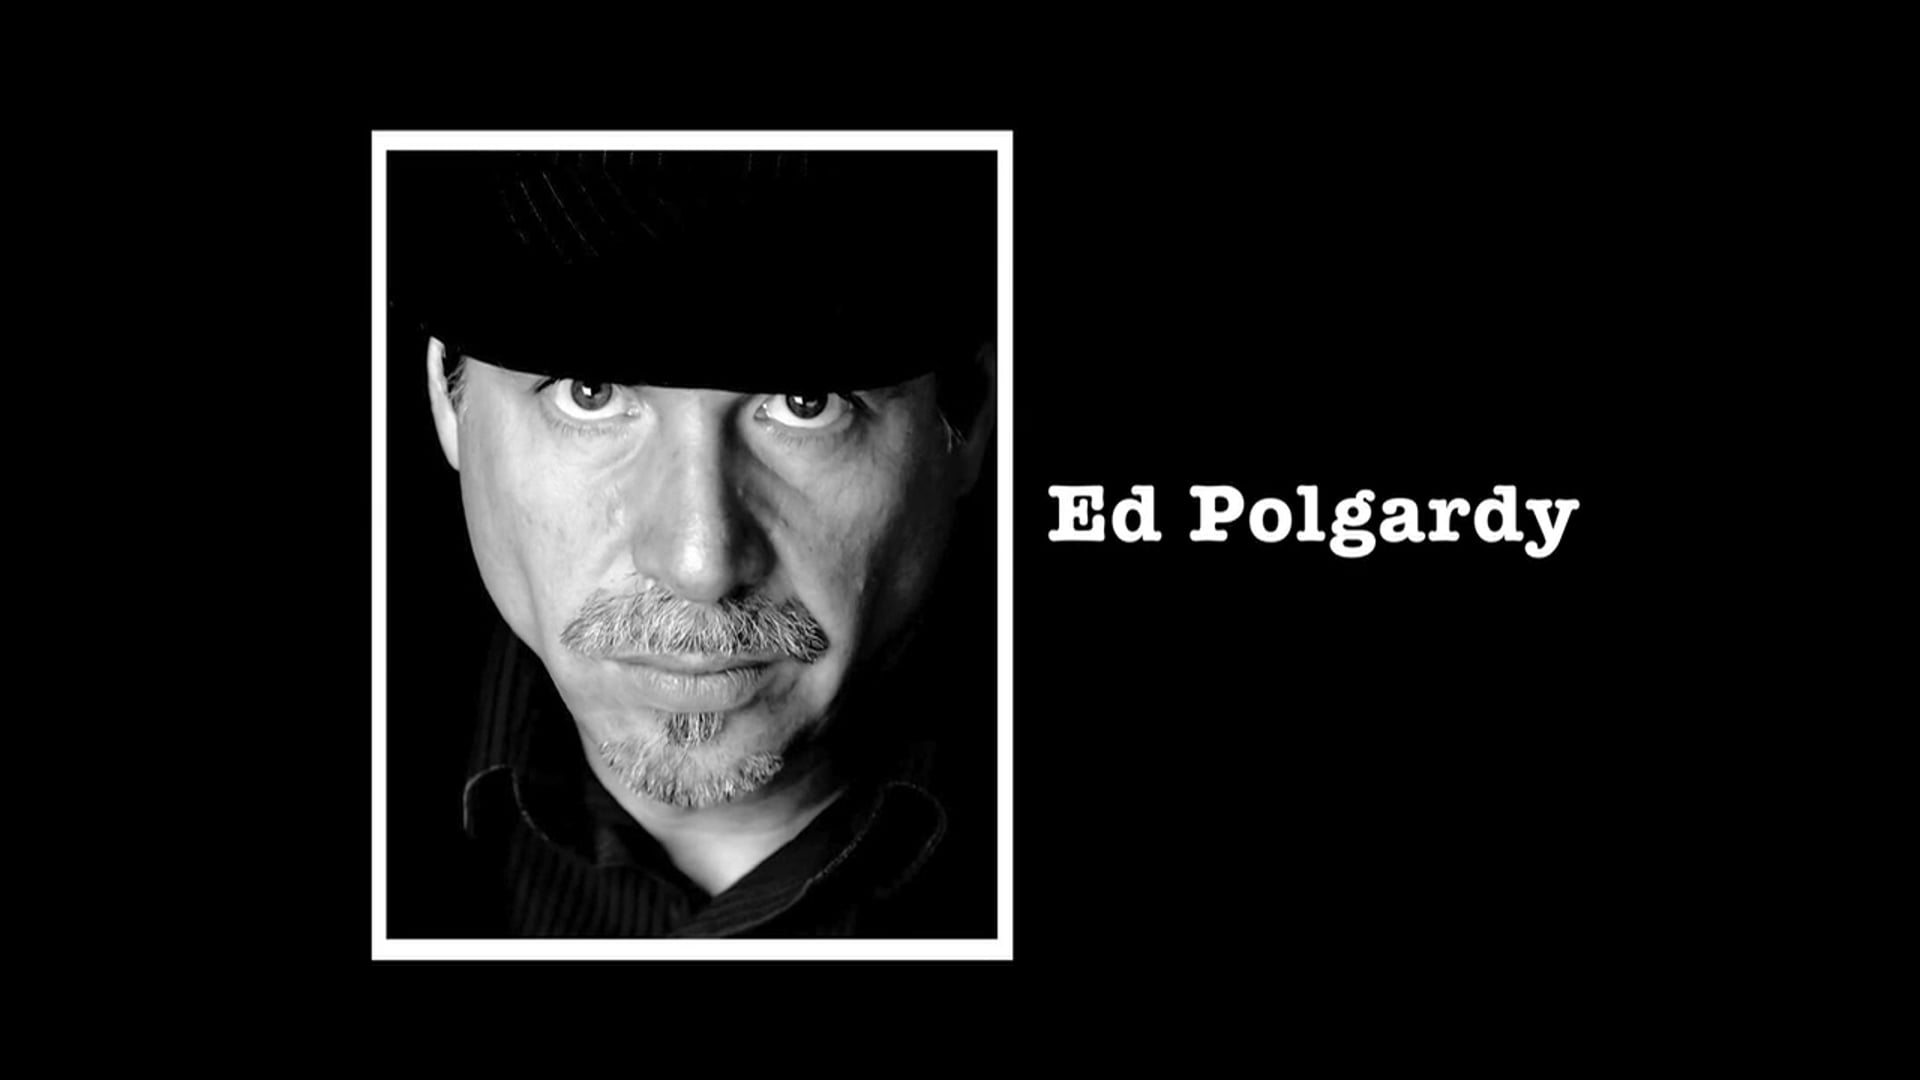 Ed Polgardy - Director's Reel (10-03-17)